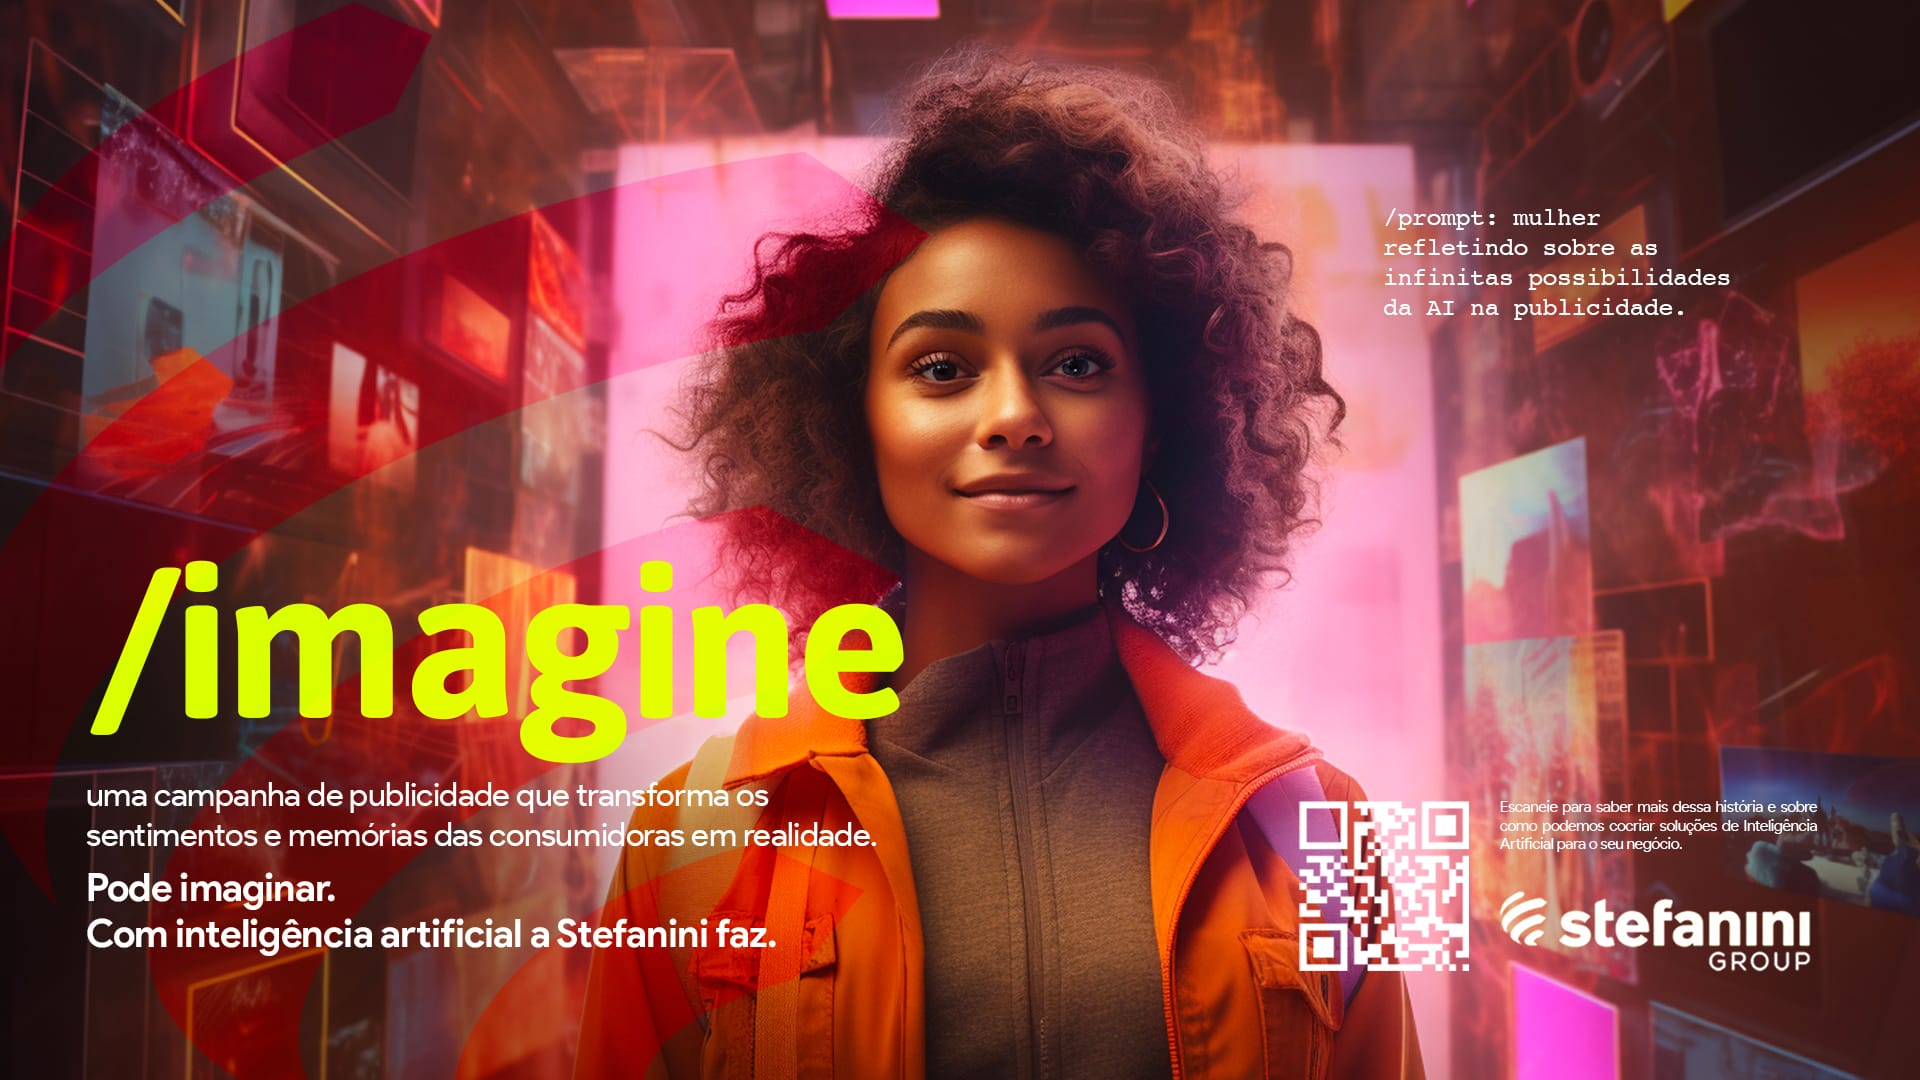 Grupo Stefanini lança campanha global ‘Imagine’ de Inteligência Artificial